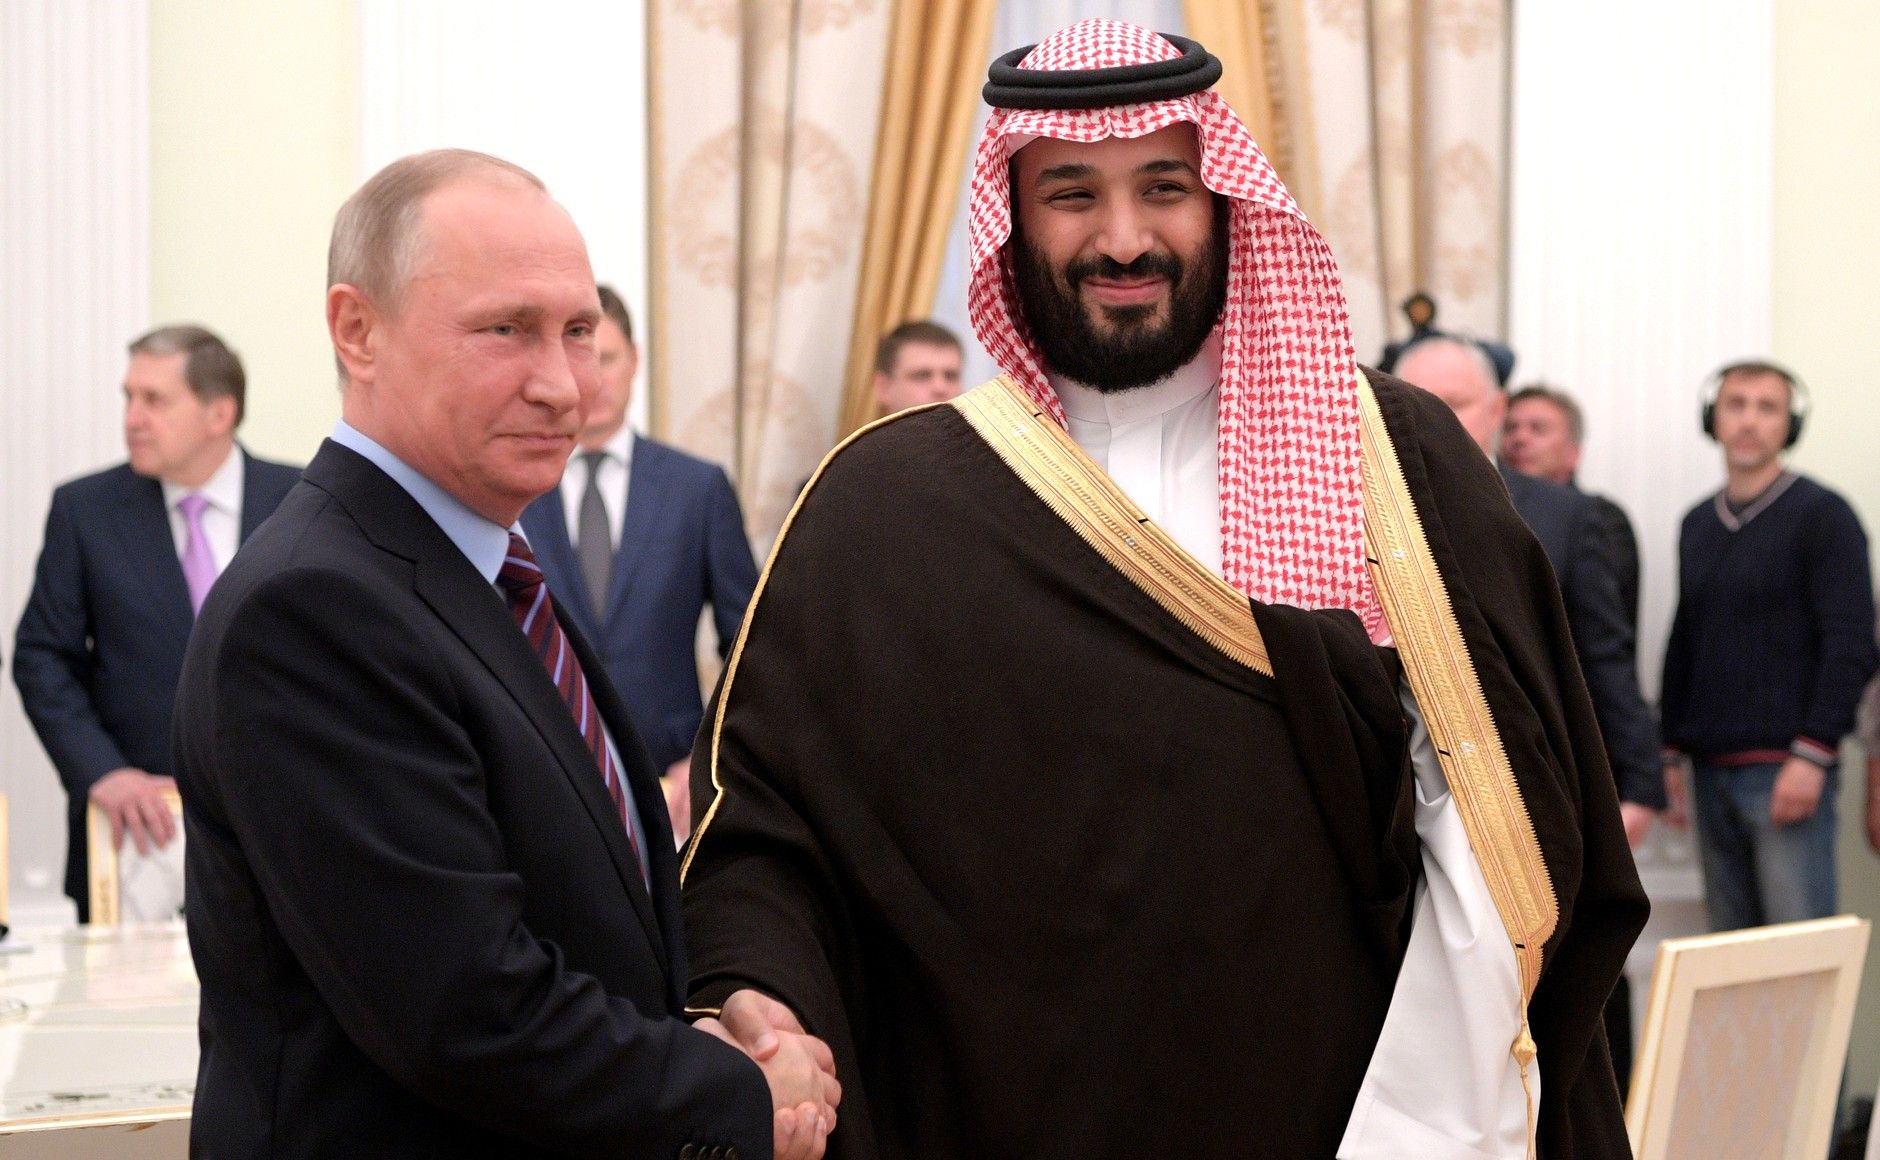 The Saudi crown prince (right) shakes hands with Vladimir Putin. Image: The Kremlin